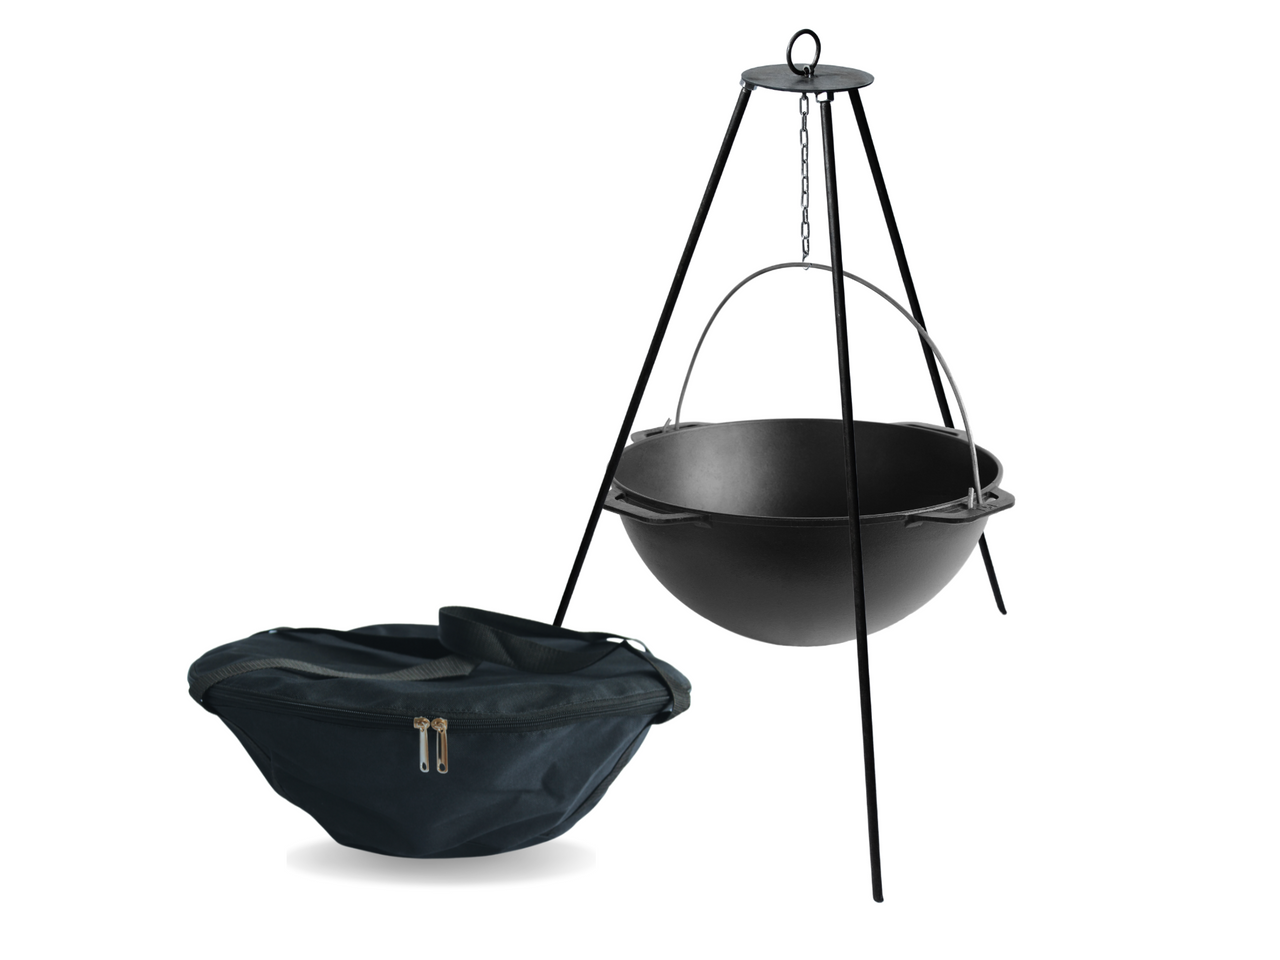 Cast iron asian cauldron 6 L with tripod and a bag